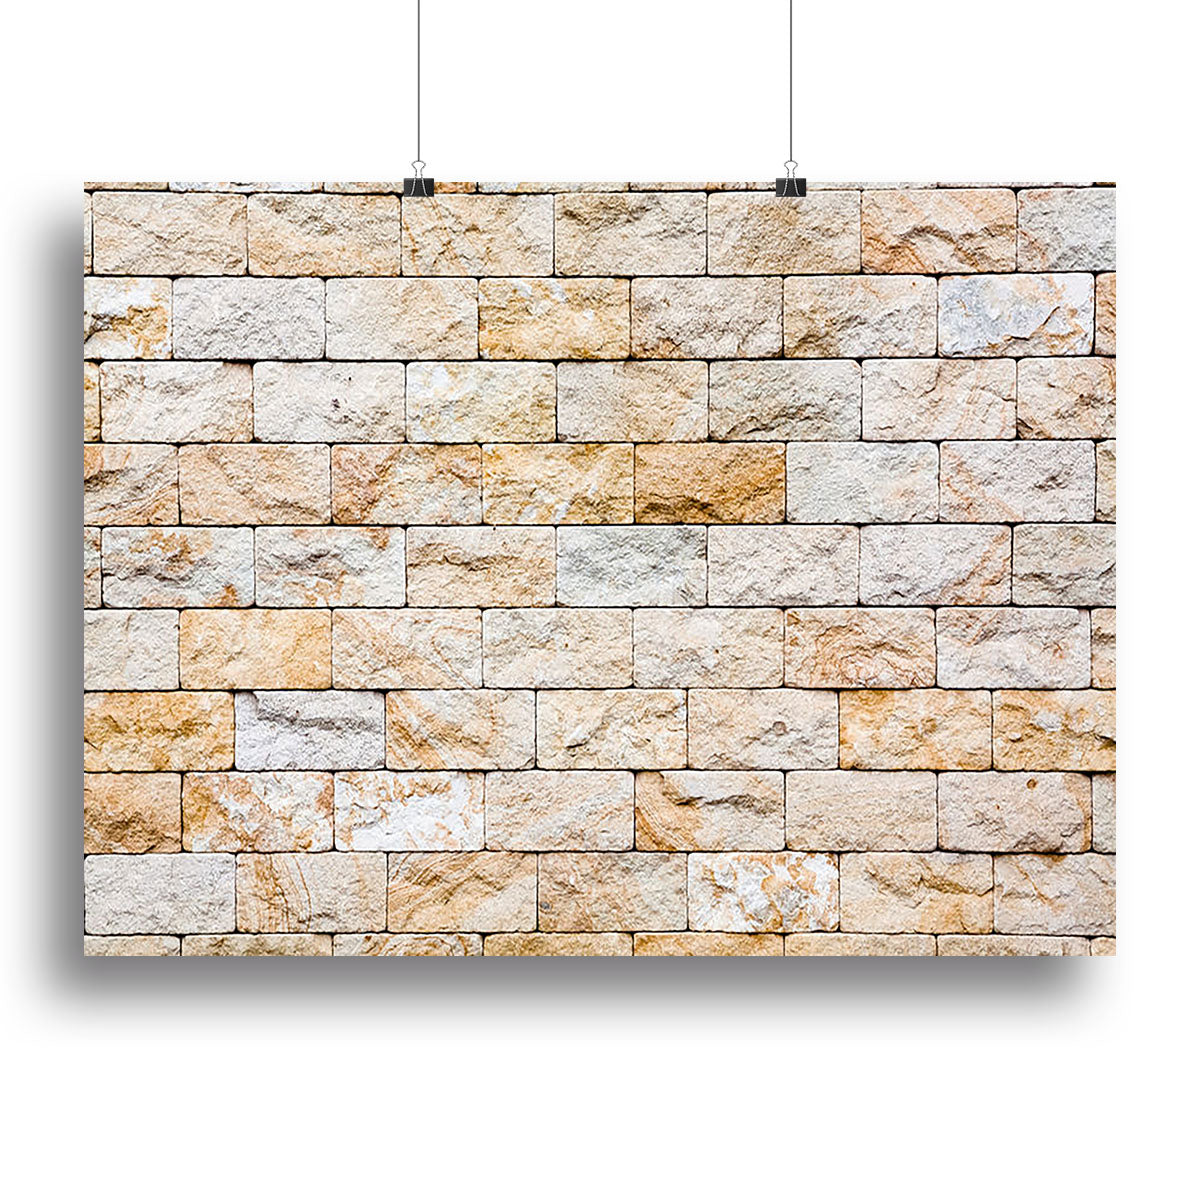 Brick stones wall Canvas Print or Poster - Canvas Art Rocks - 2